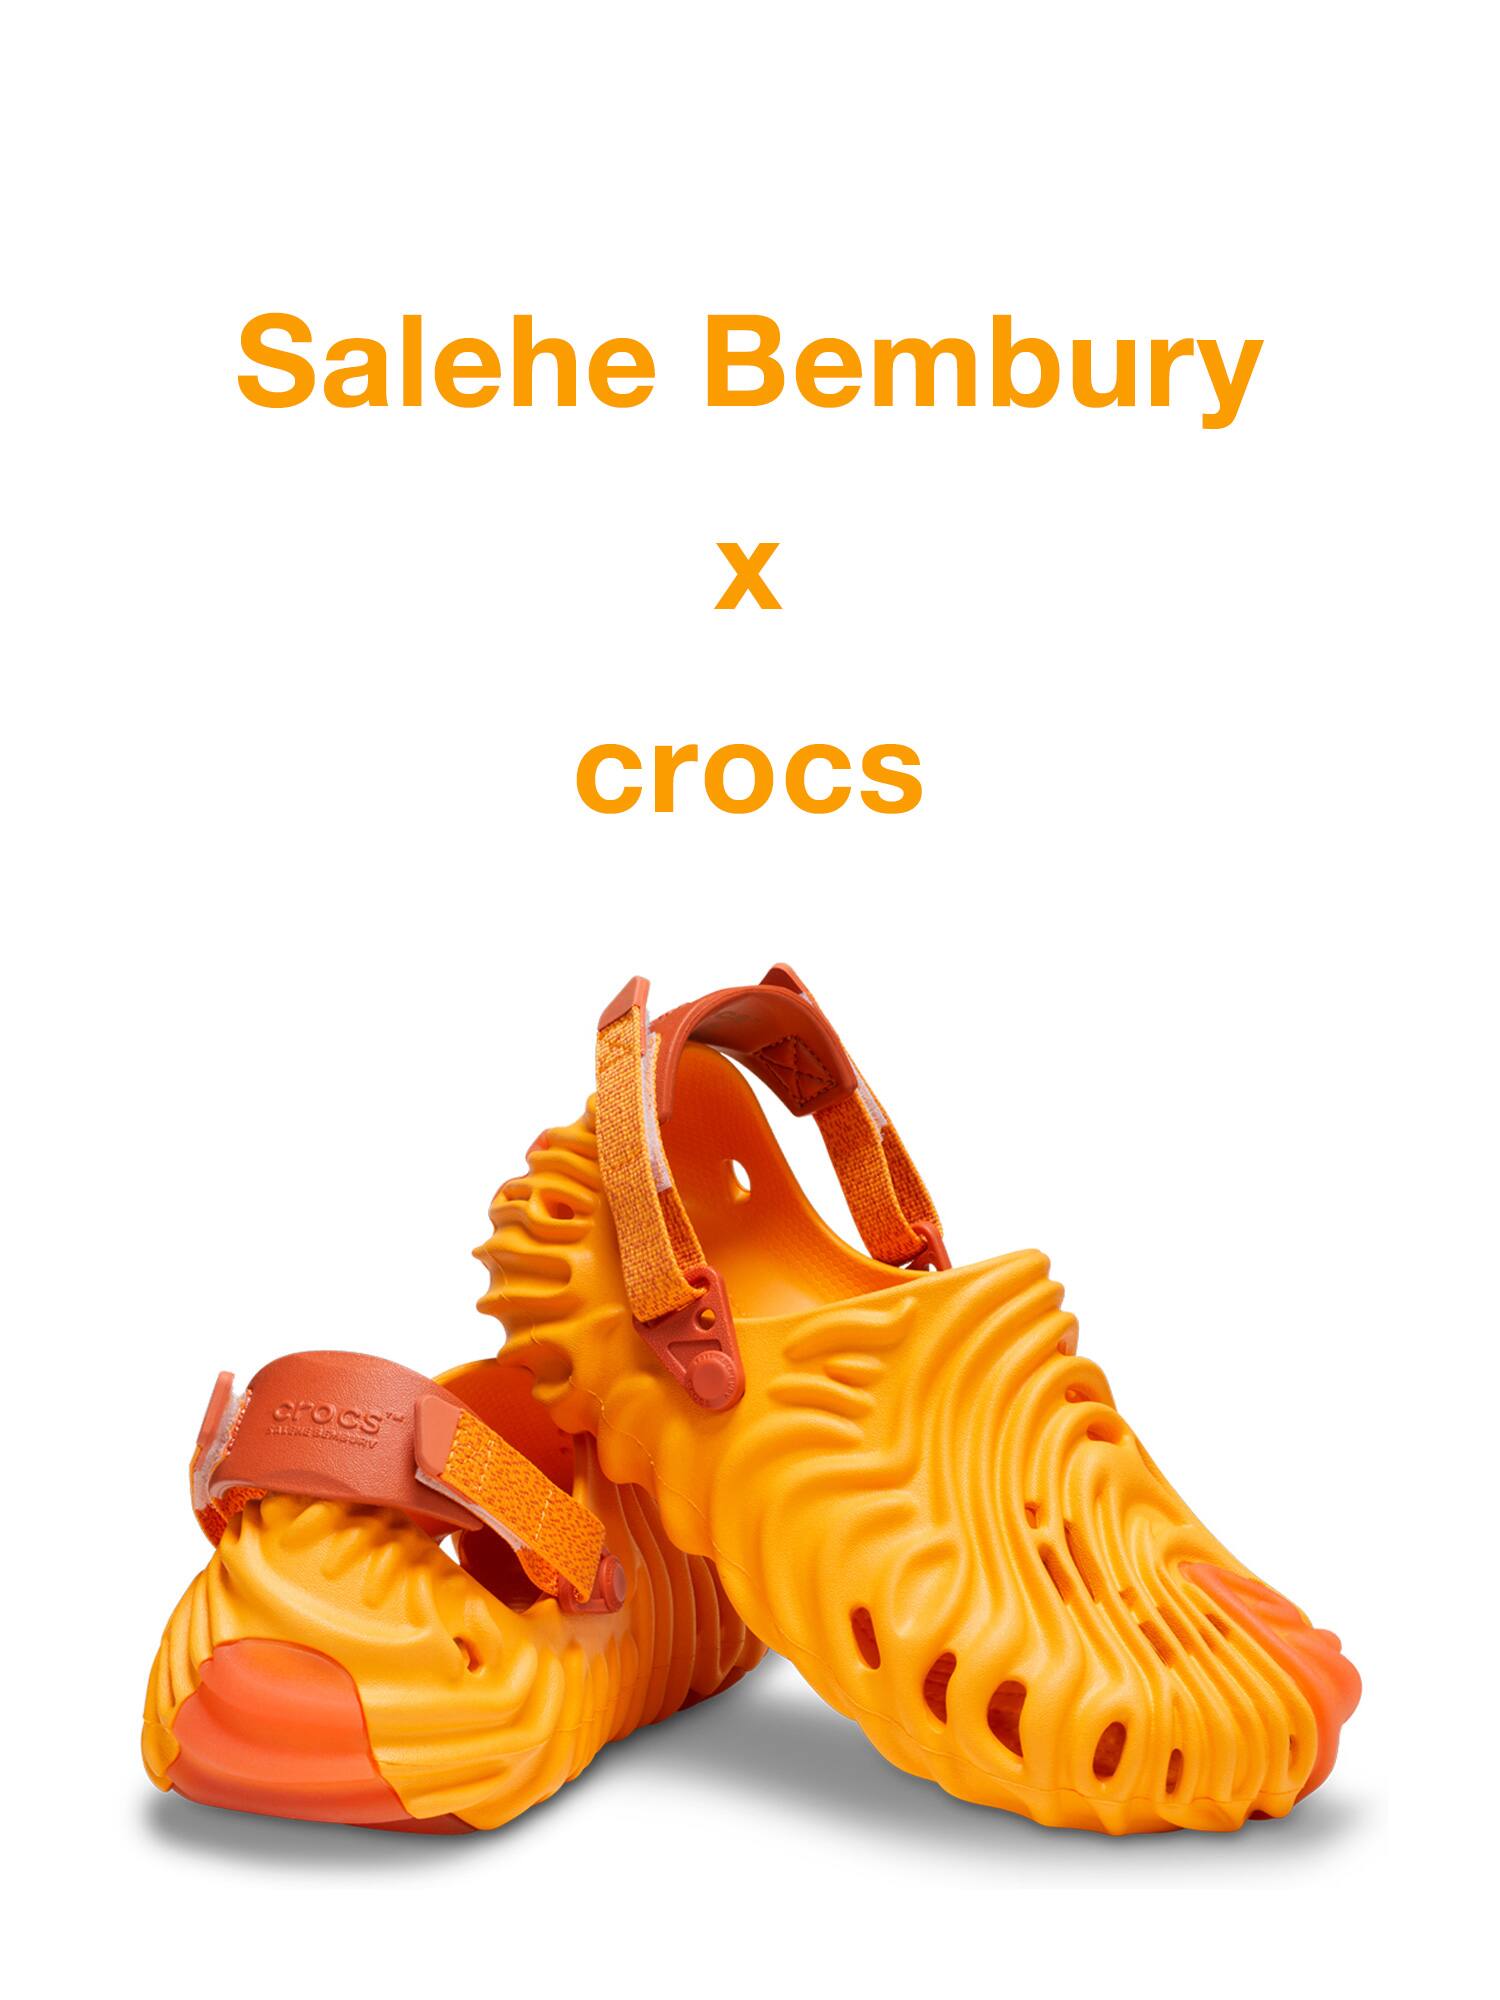 Salehe Bembury x Crocs